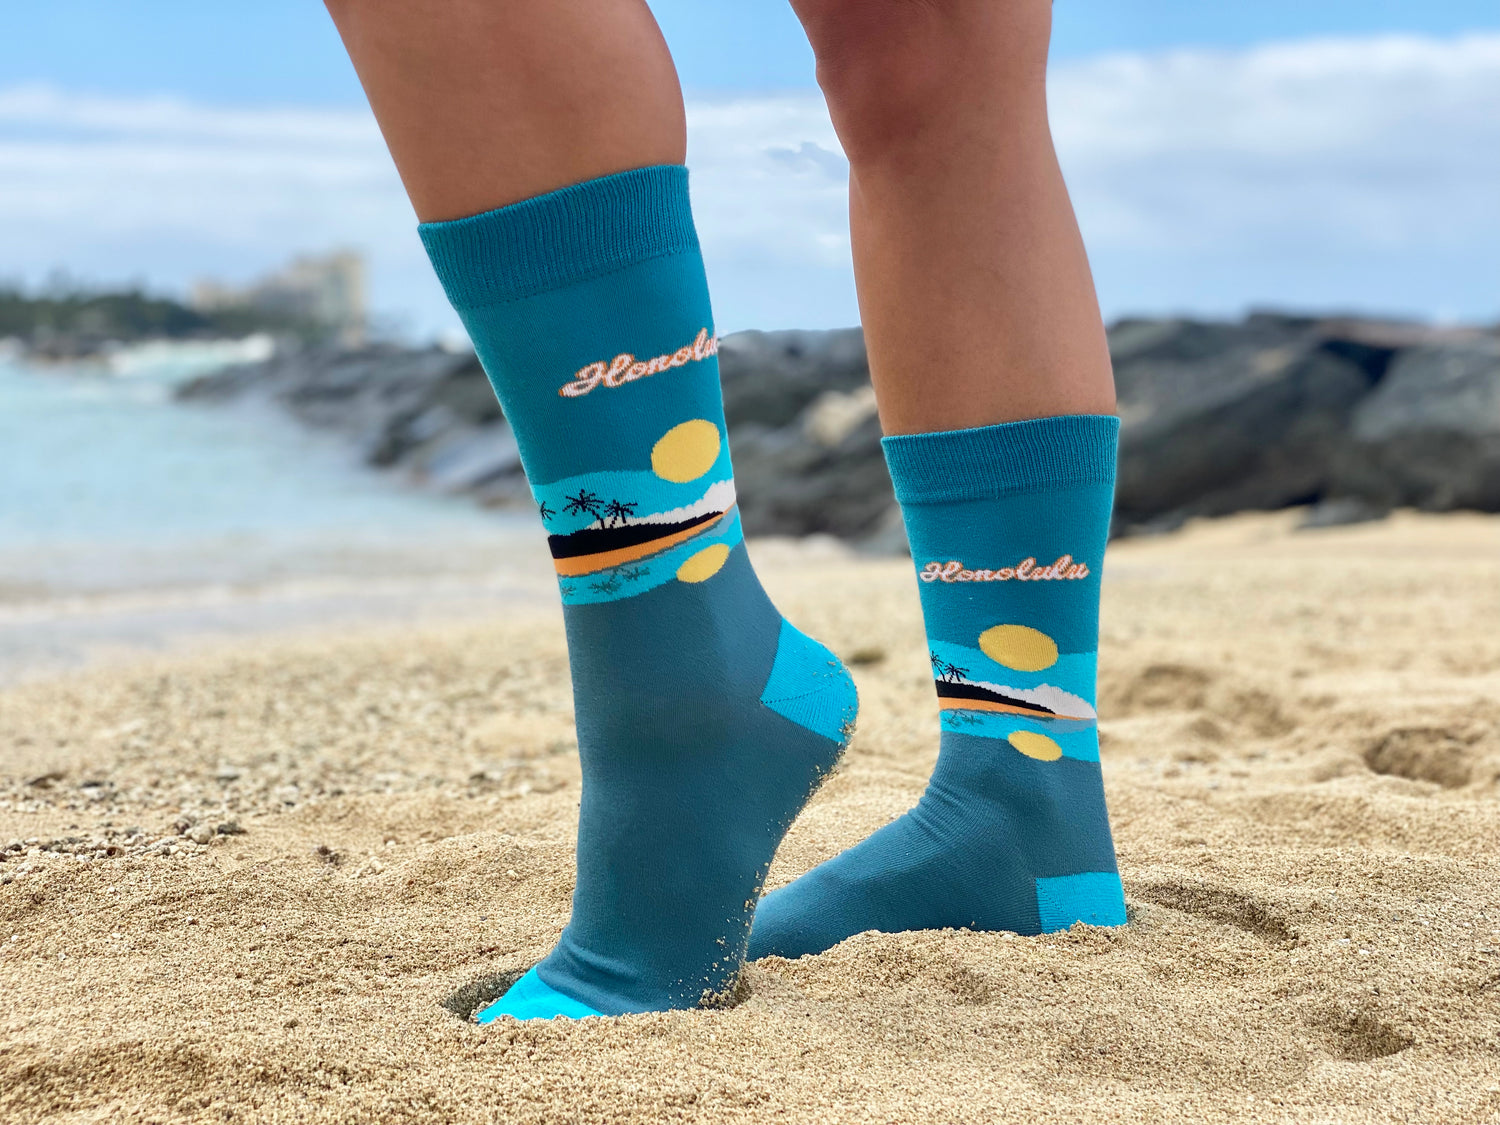 Blue socks with a beach design and the word "Honolulu", worn on a woman's feet on the beach.